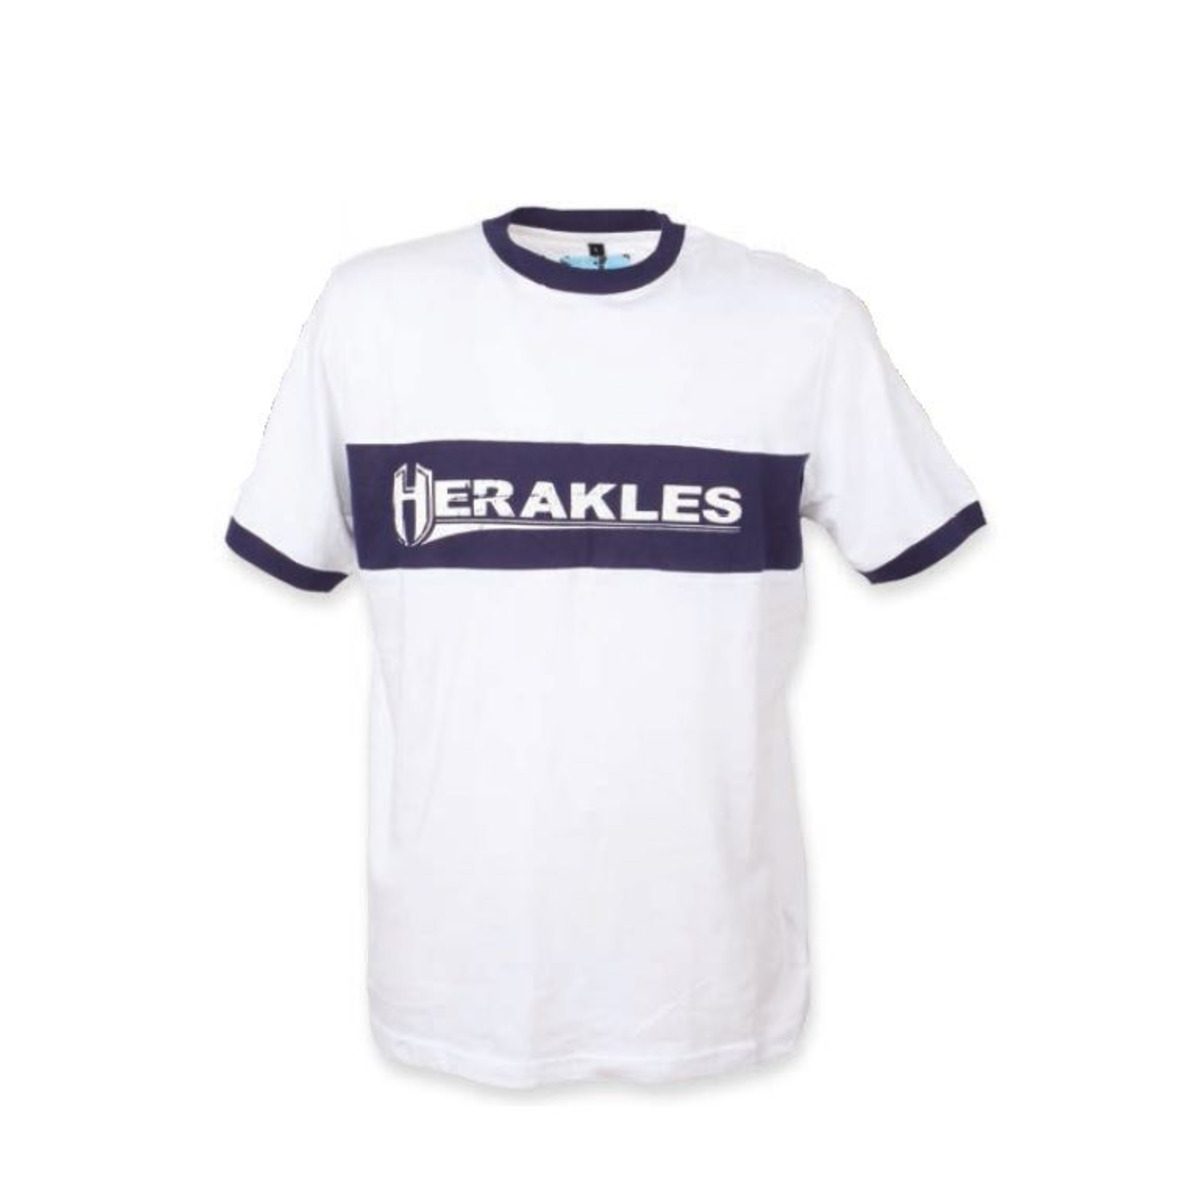 Herakles White-Blue T-Shirt - 3XL